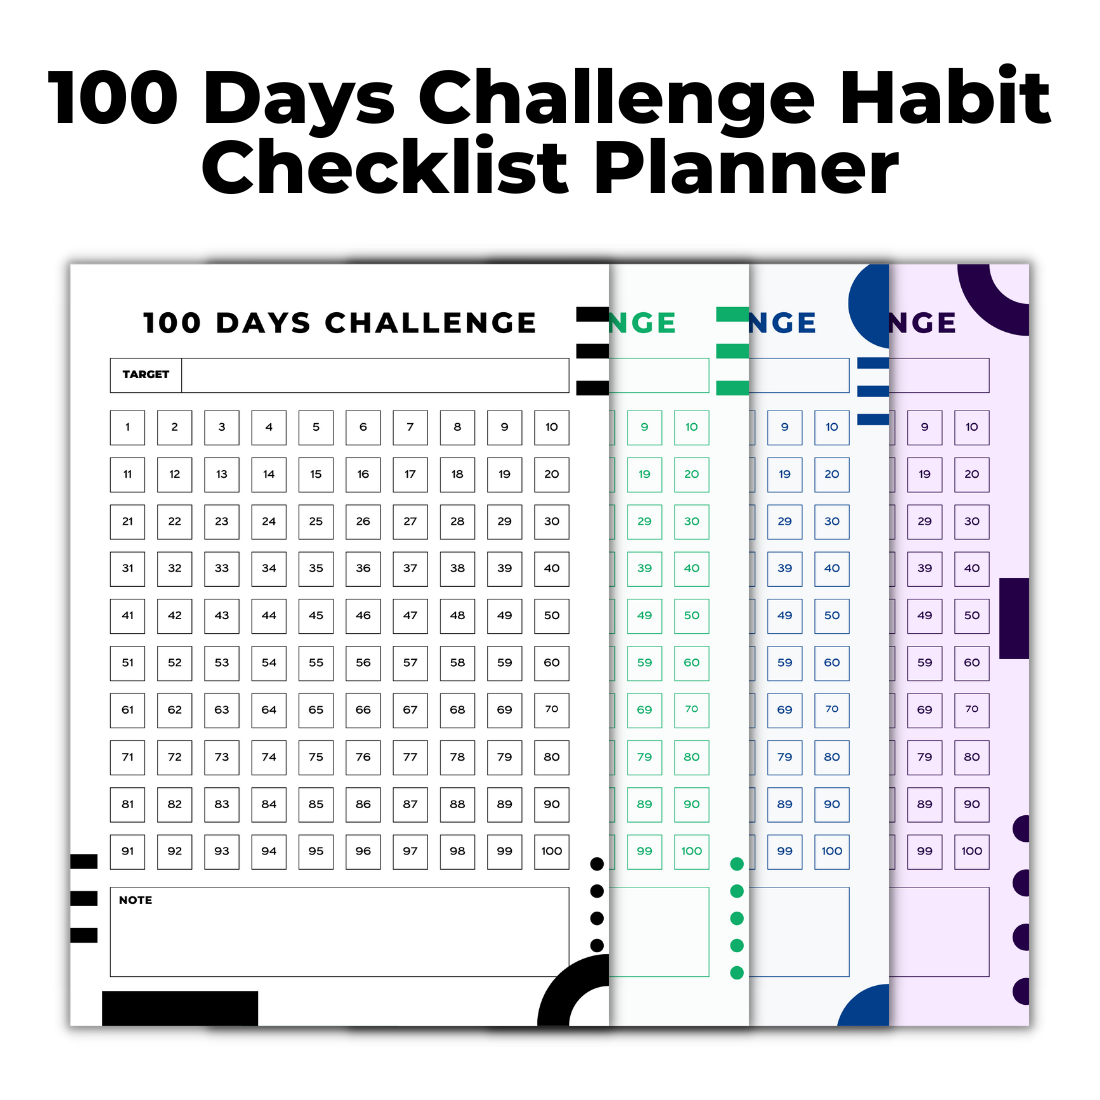 100 Days Challenge Habit Checklist Planner Template cover image.